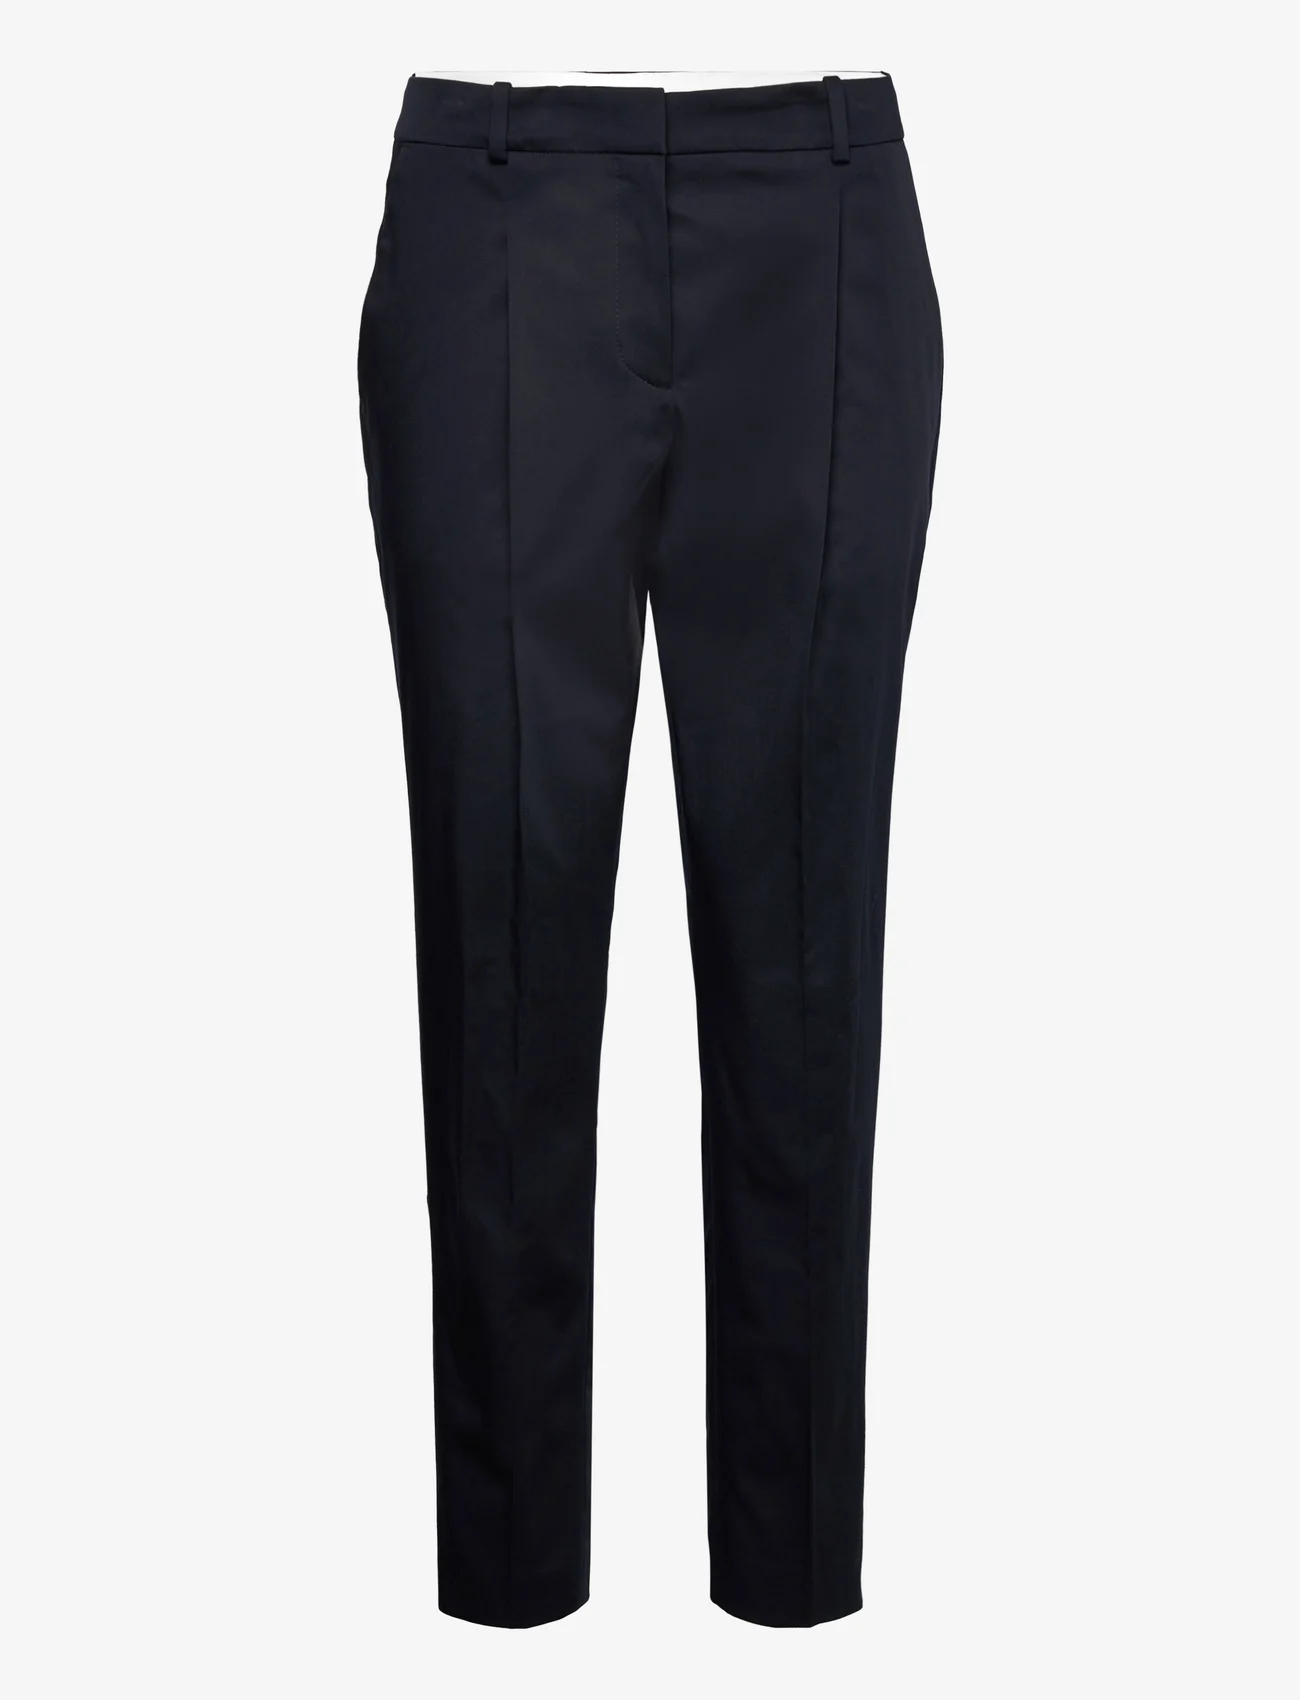 BOSS - Tetida - tailored trousers - dark blue - 0